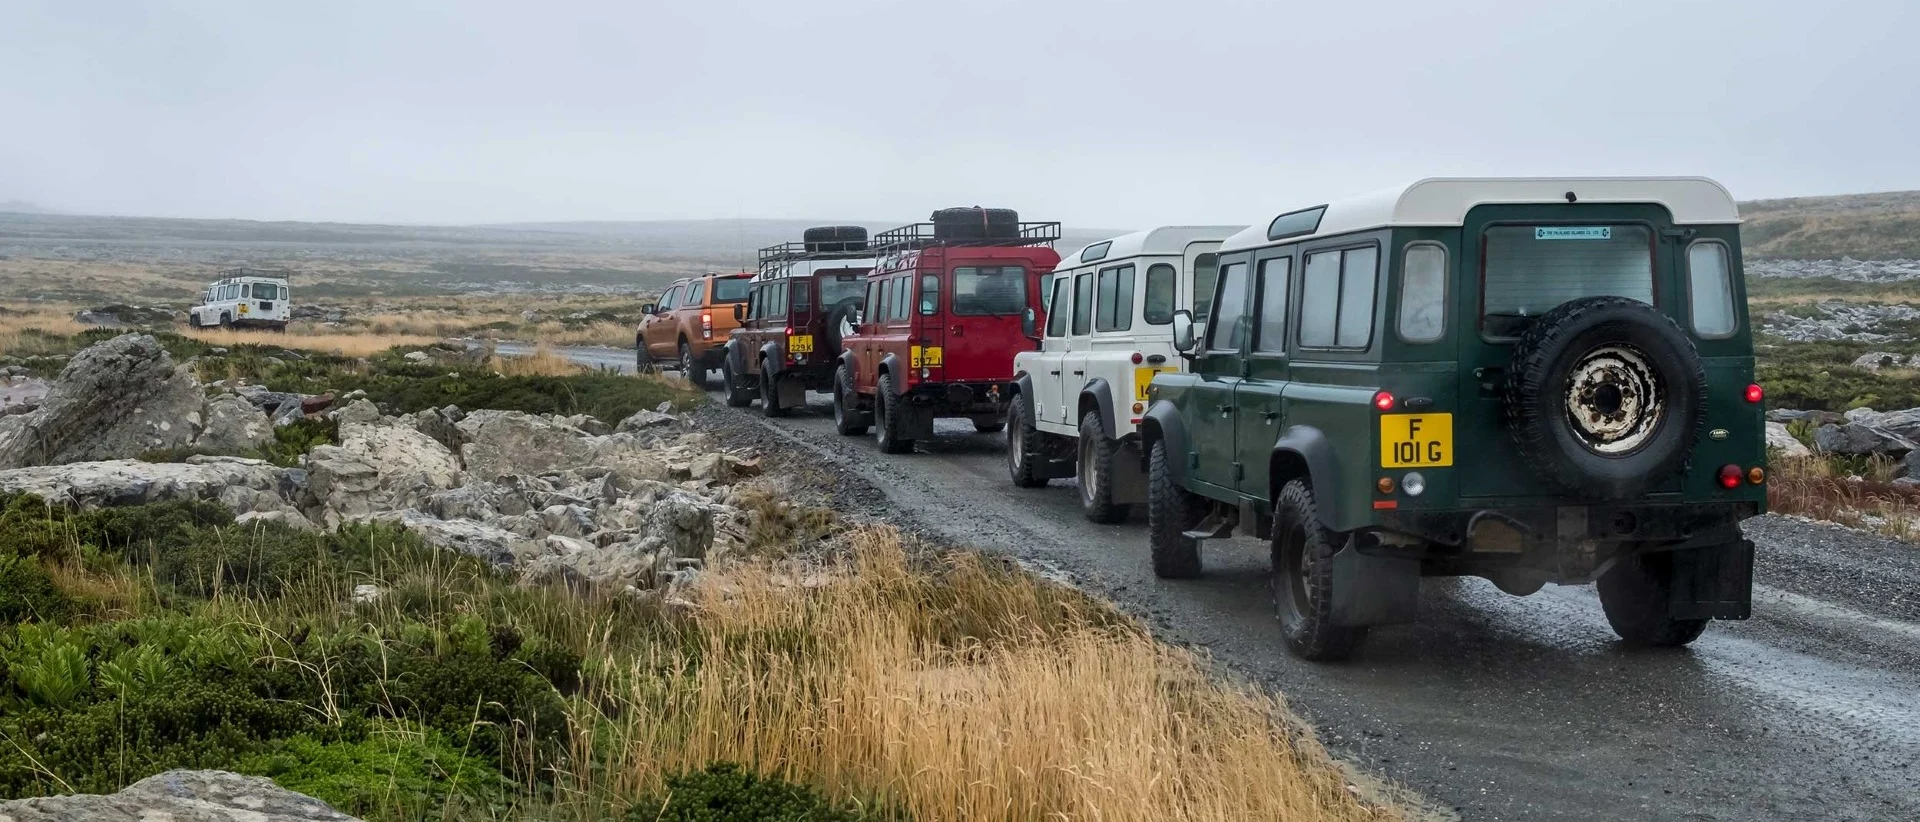 Port Stanley: Crown Jewel of the Falklands